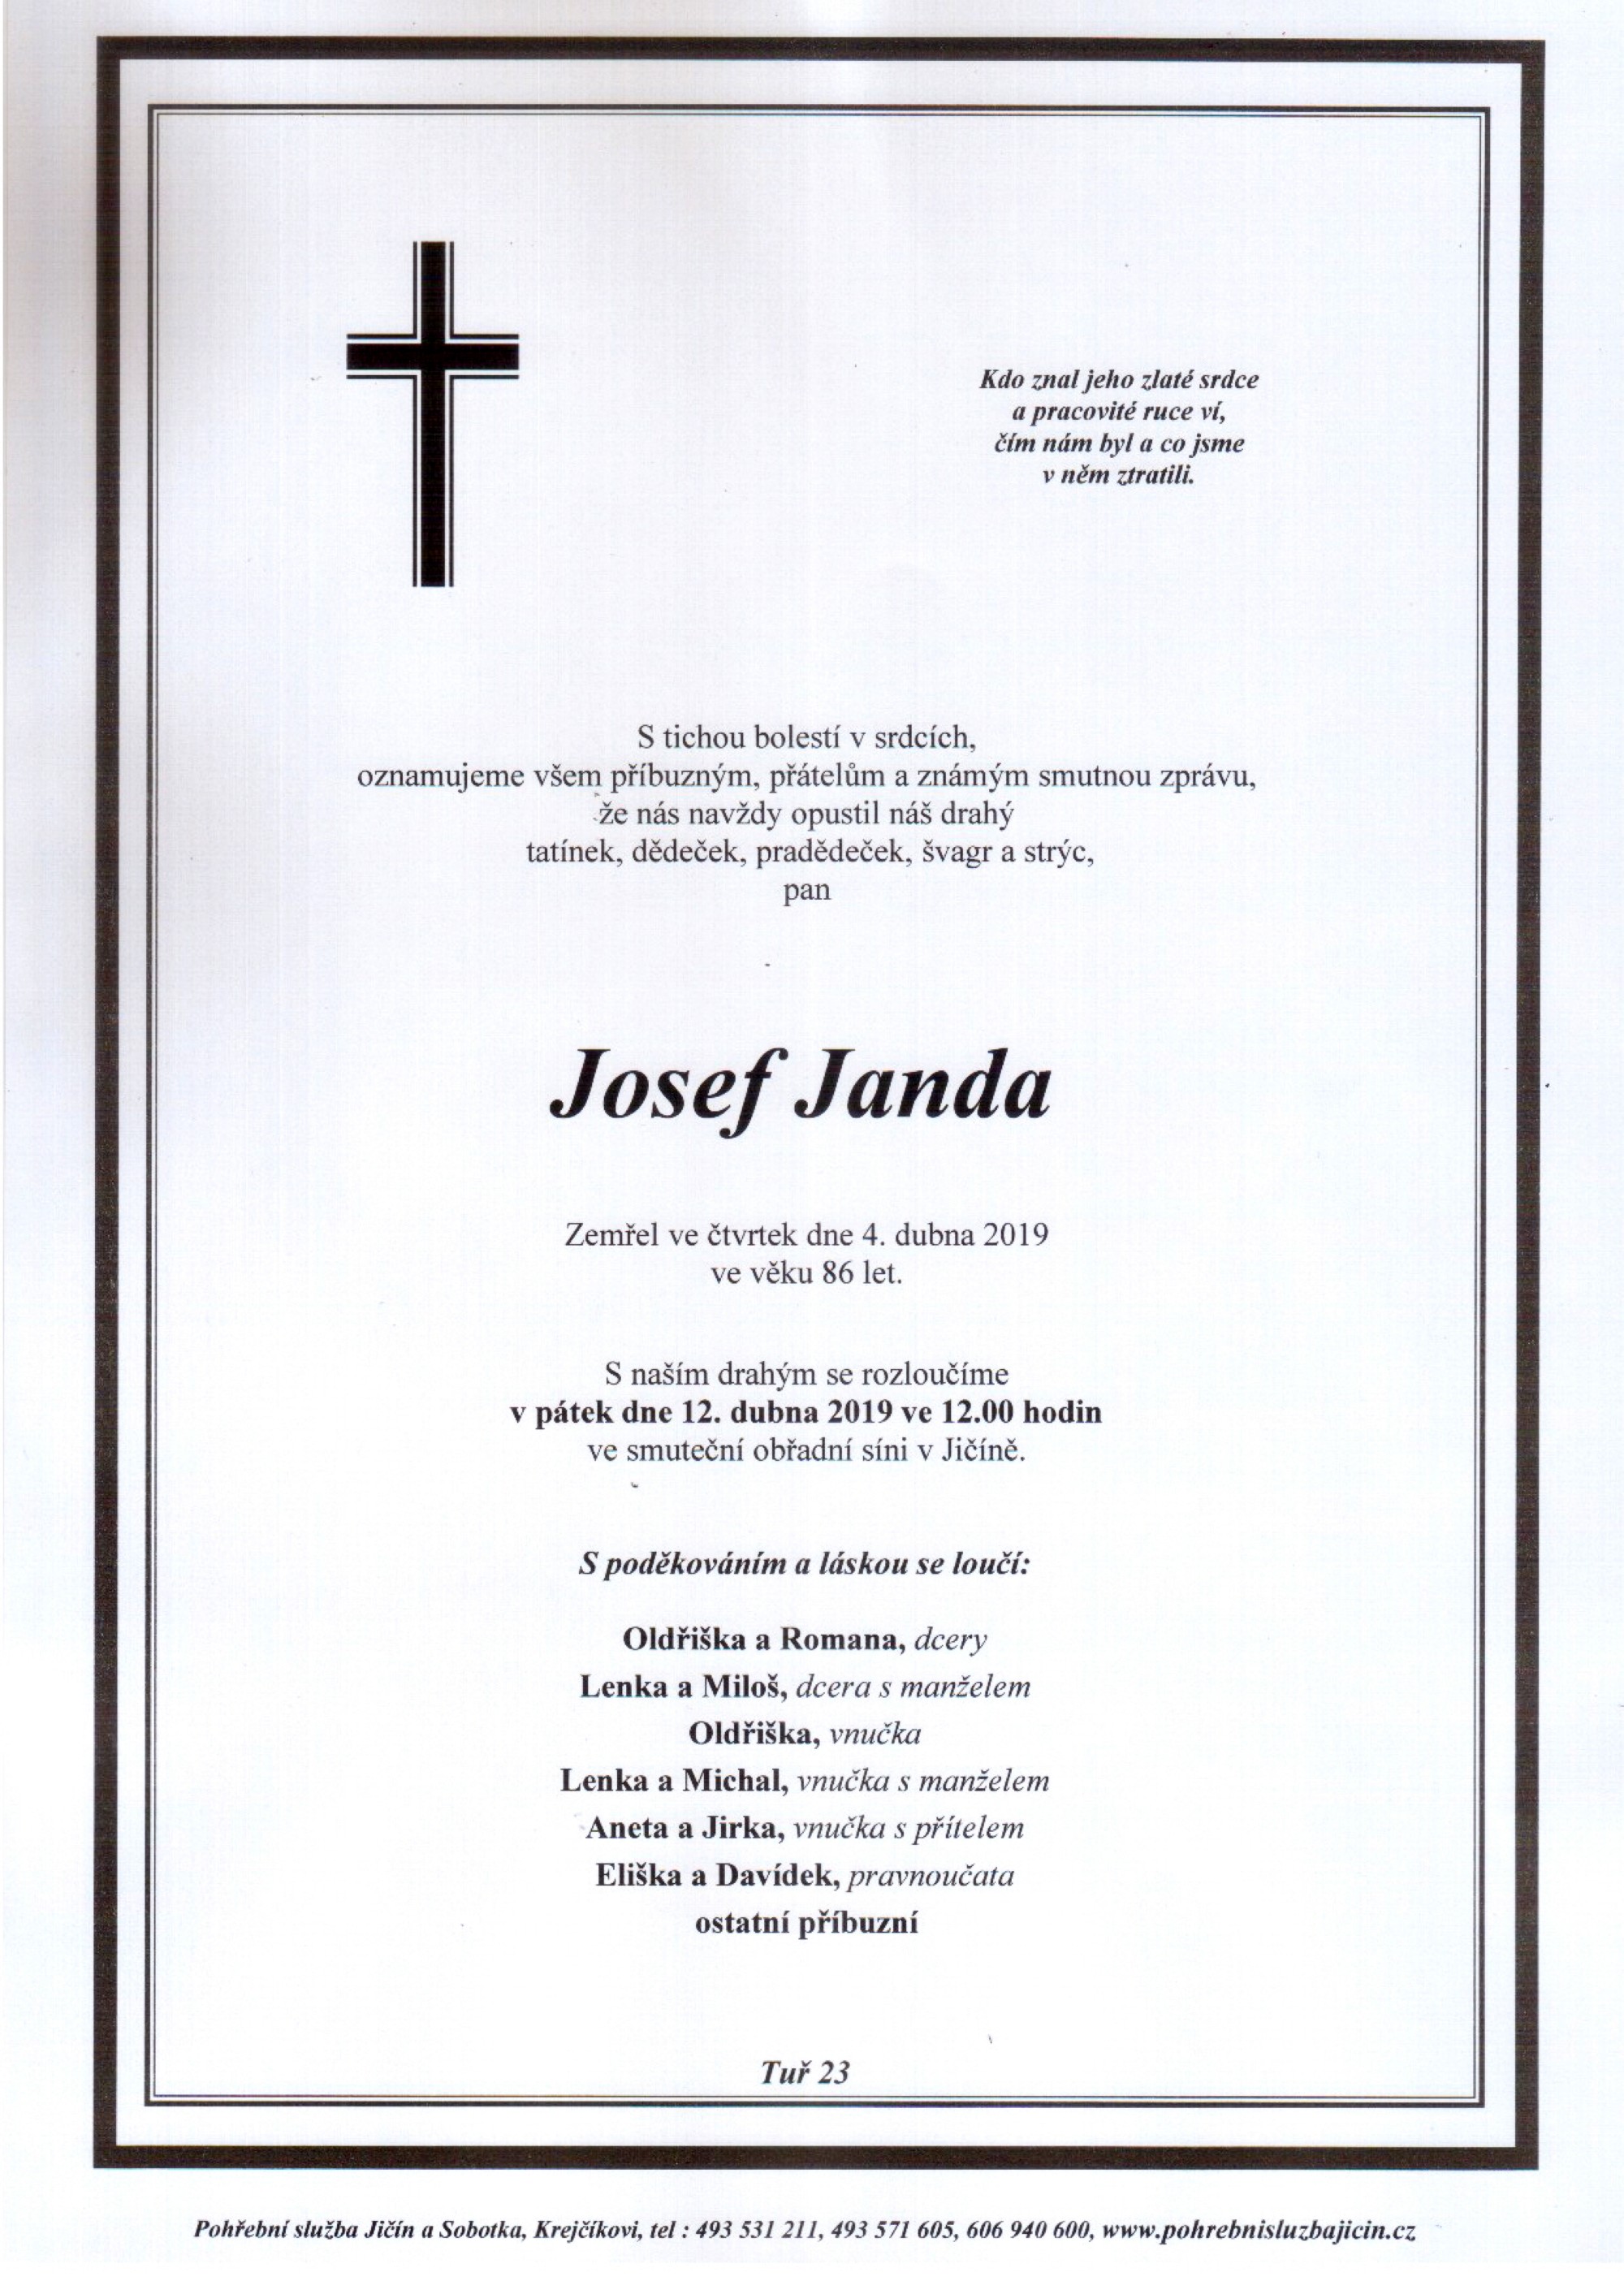 Josef Janda